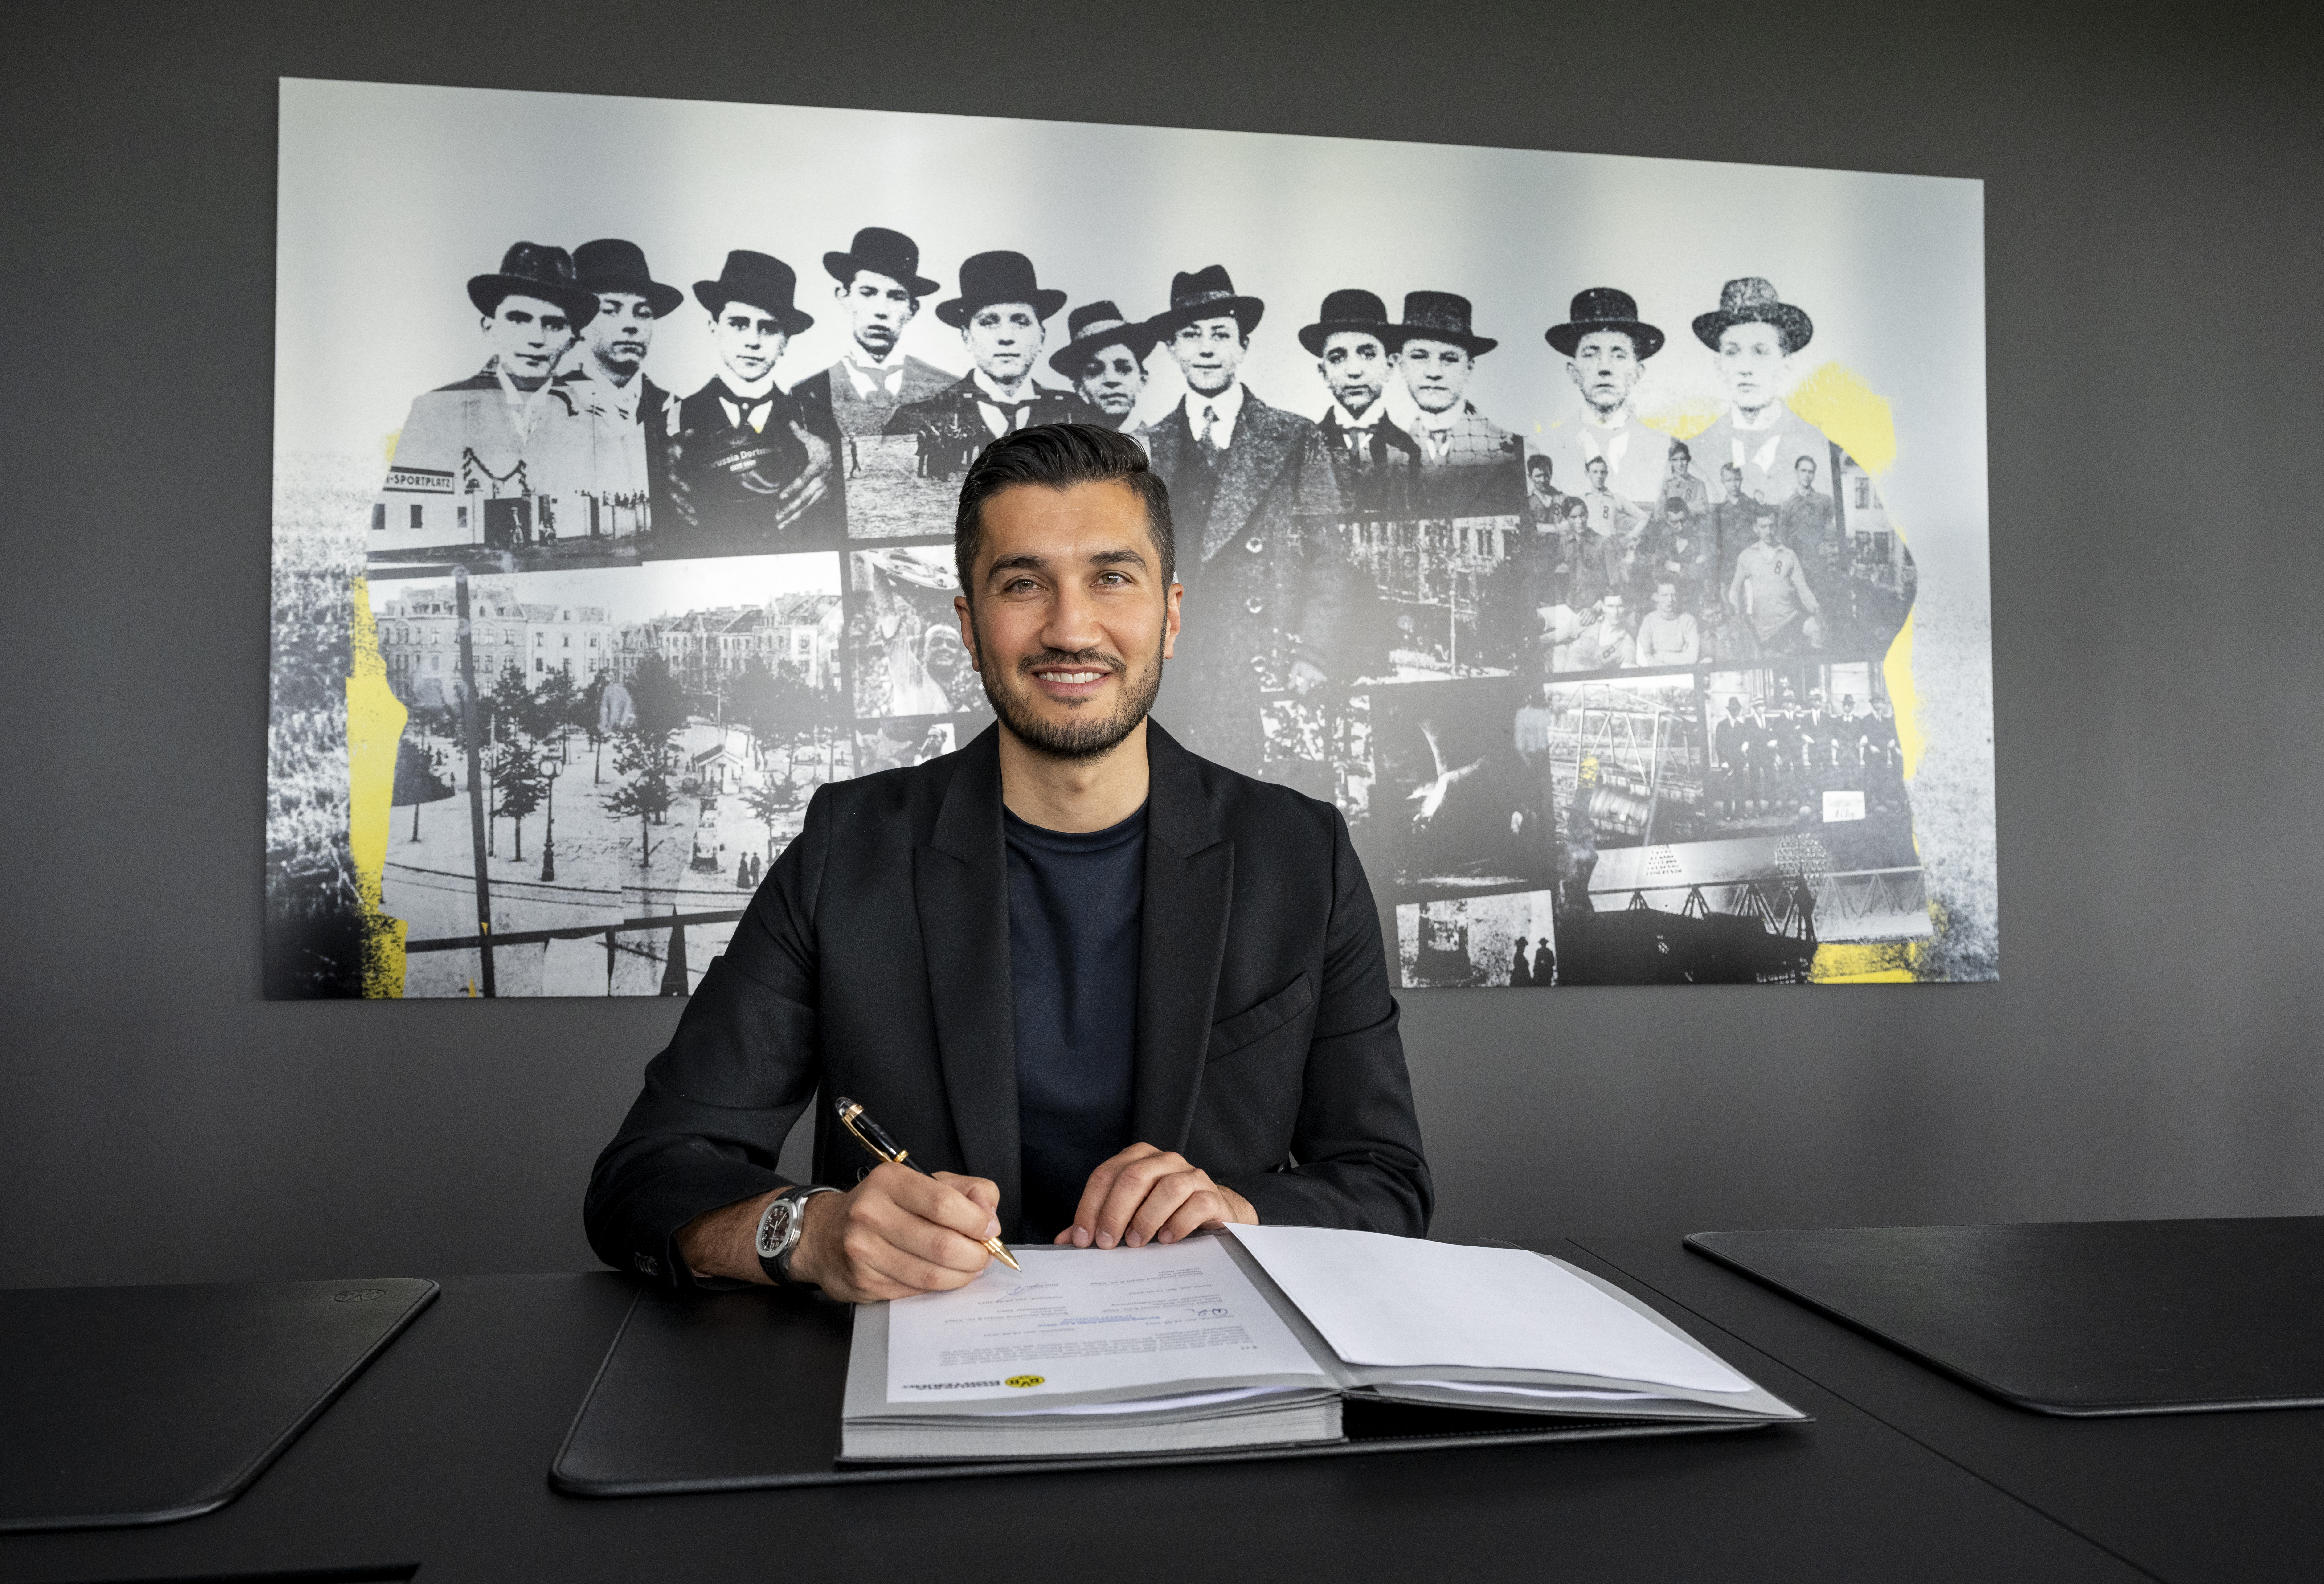 Nuri Sahin has been announced as the new Borussia Dortmund manager